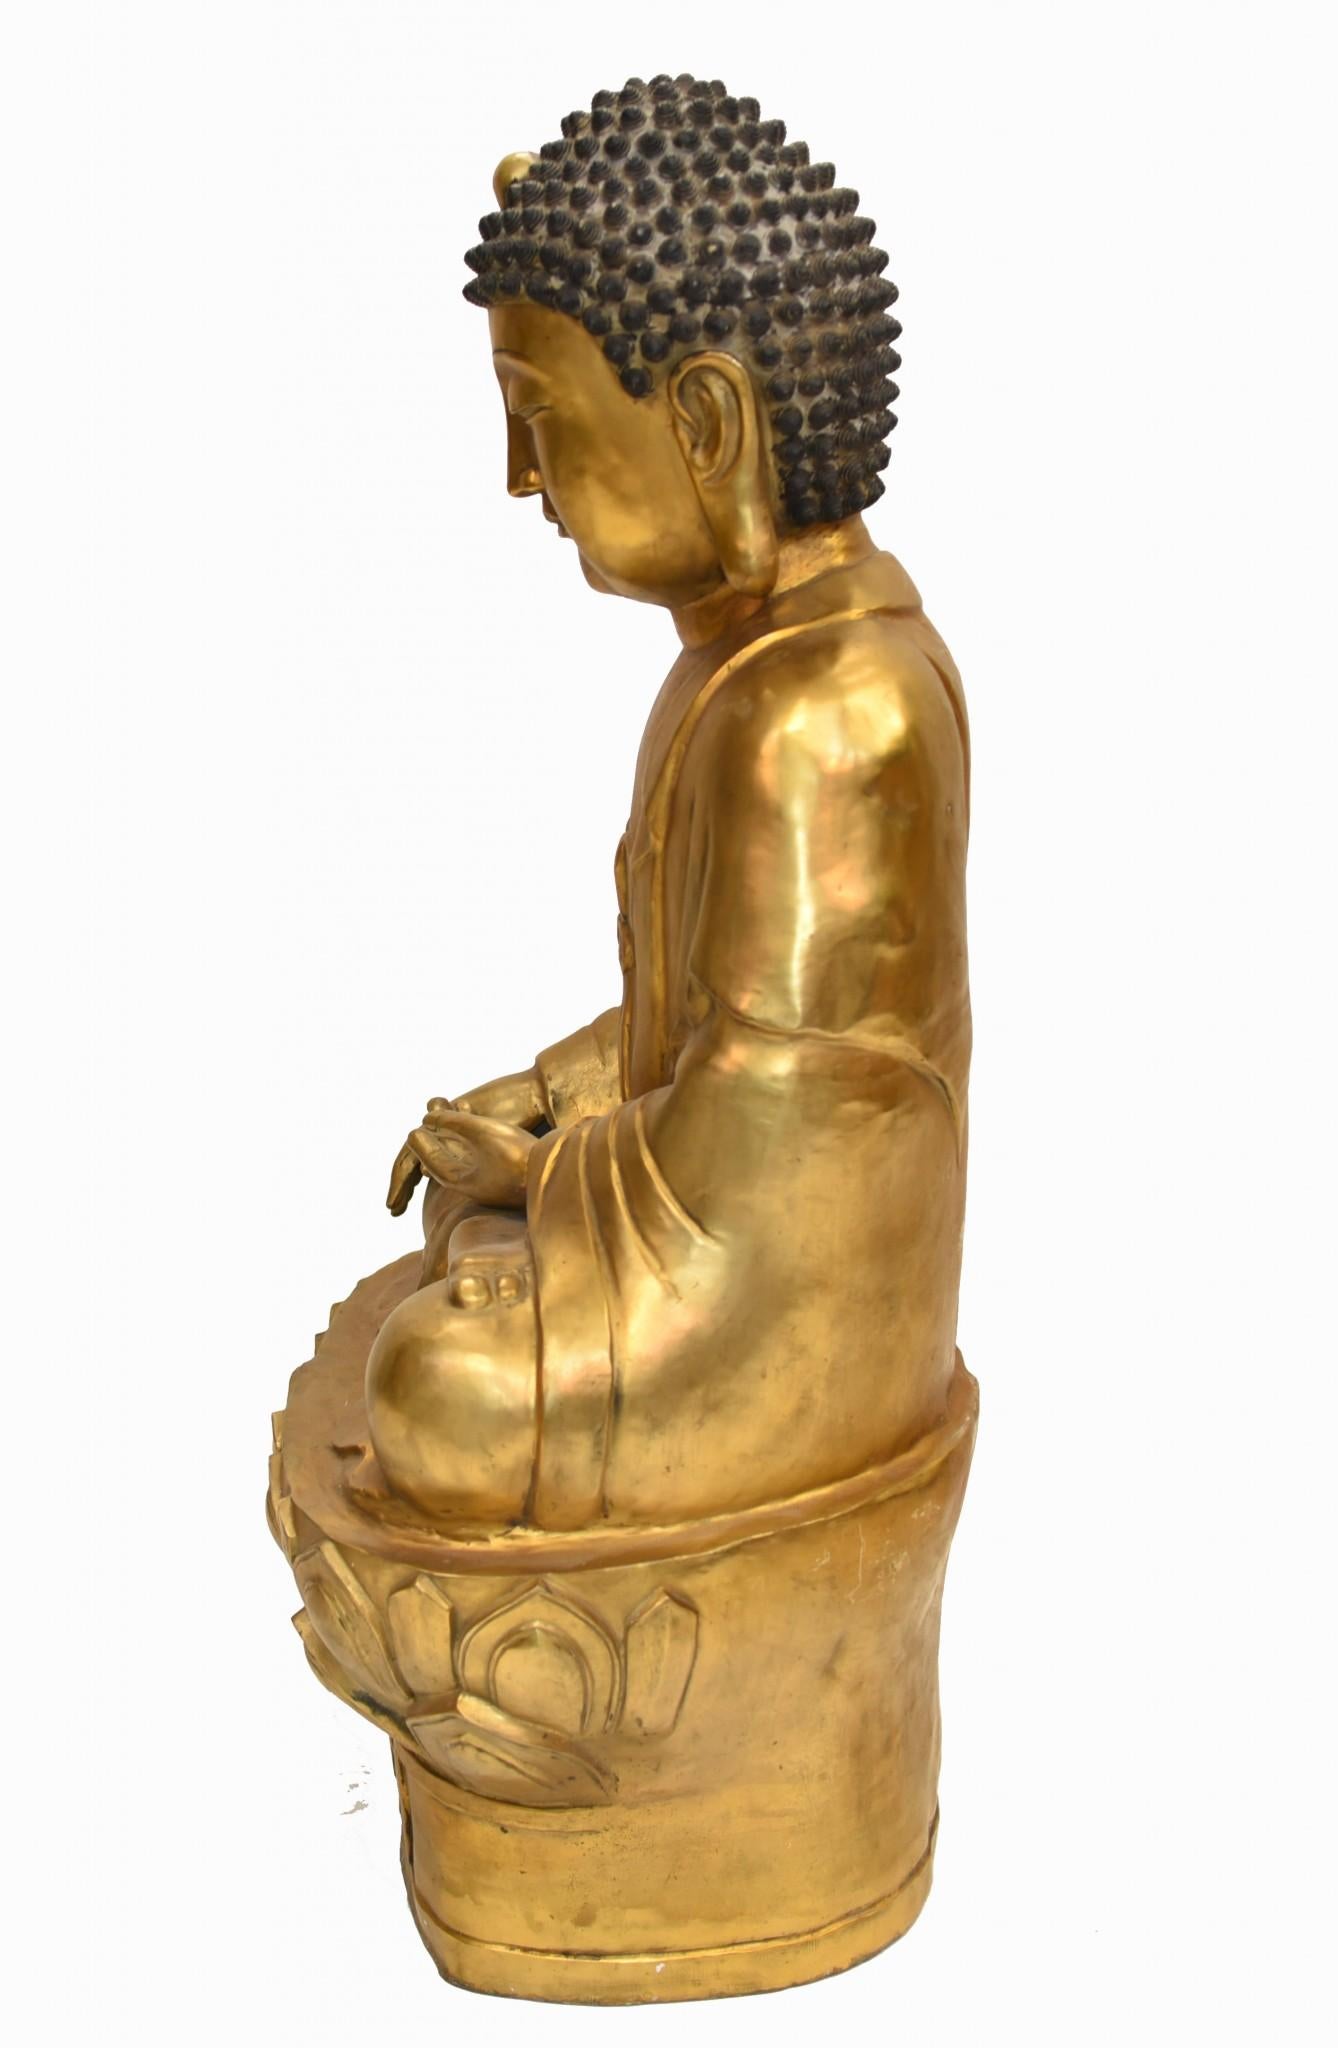 Late 20th Century Burmese Bronze Buddha Statue Meditation Pose Buddhism Buddhist Art For Sale